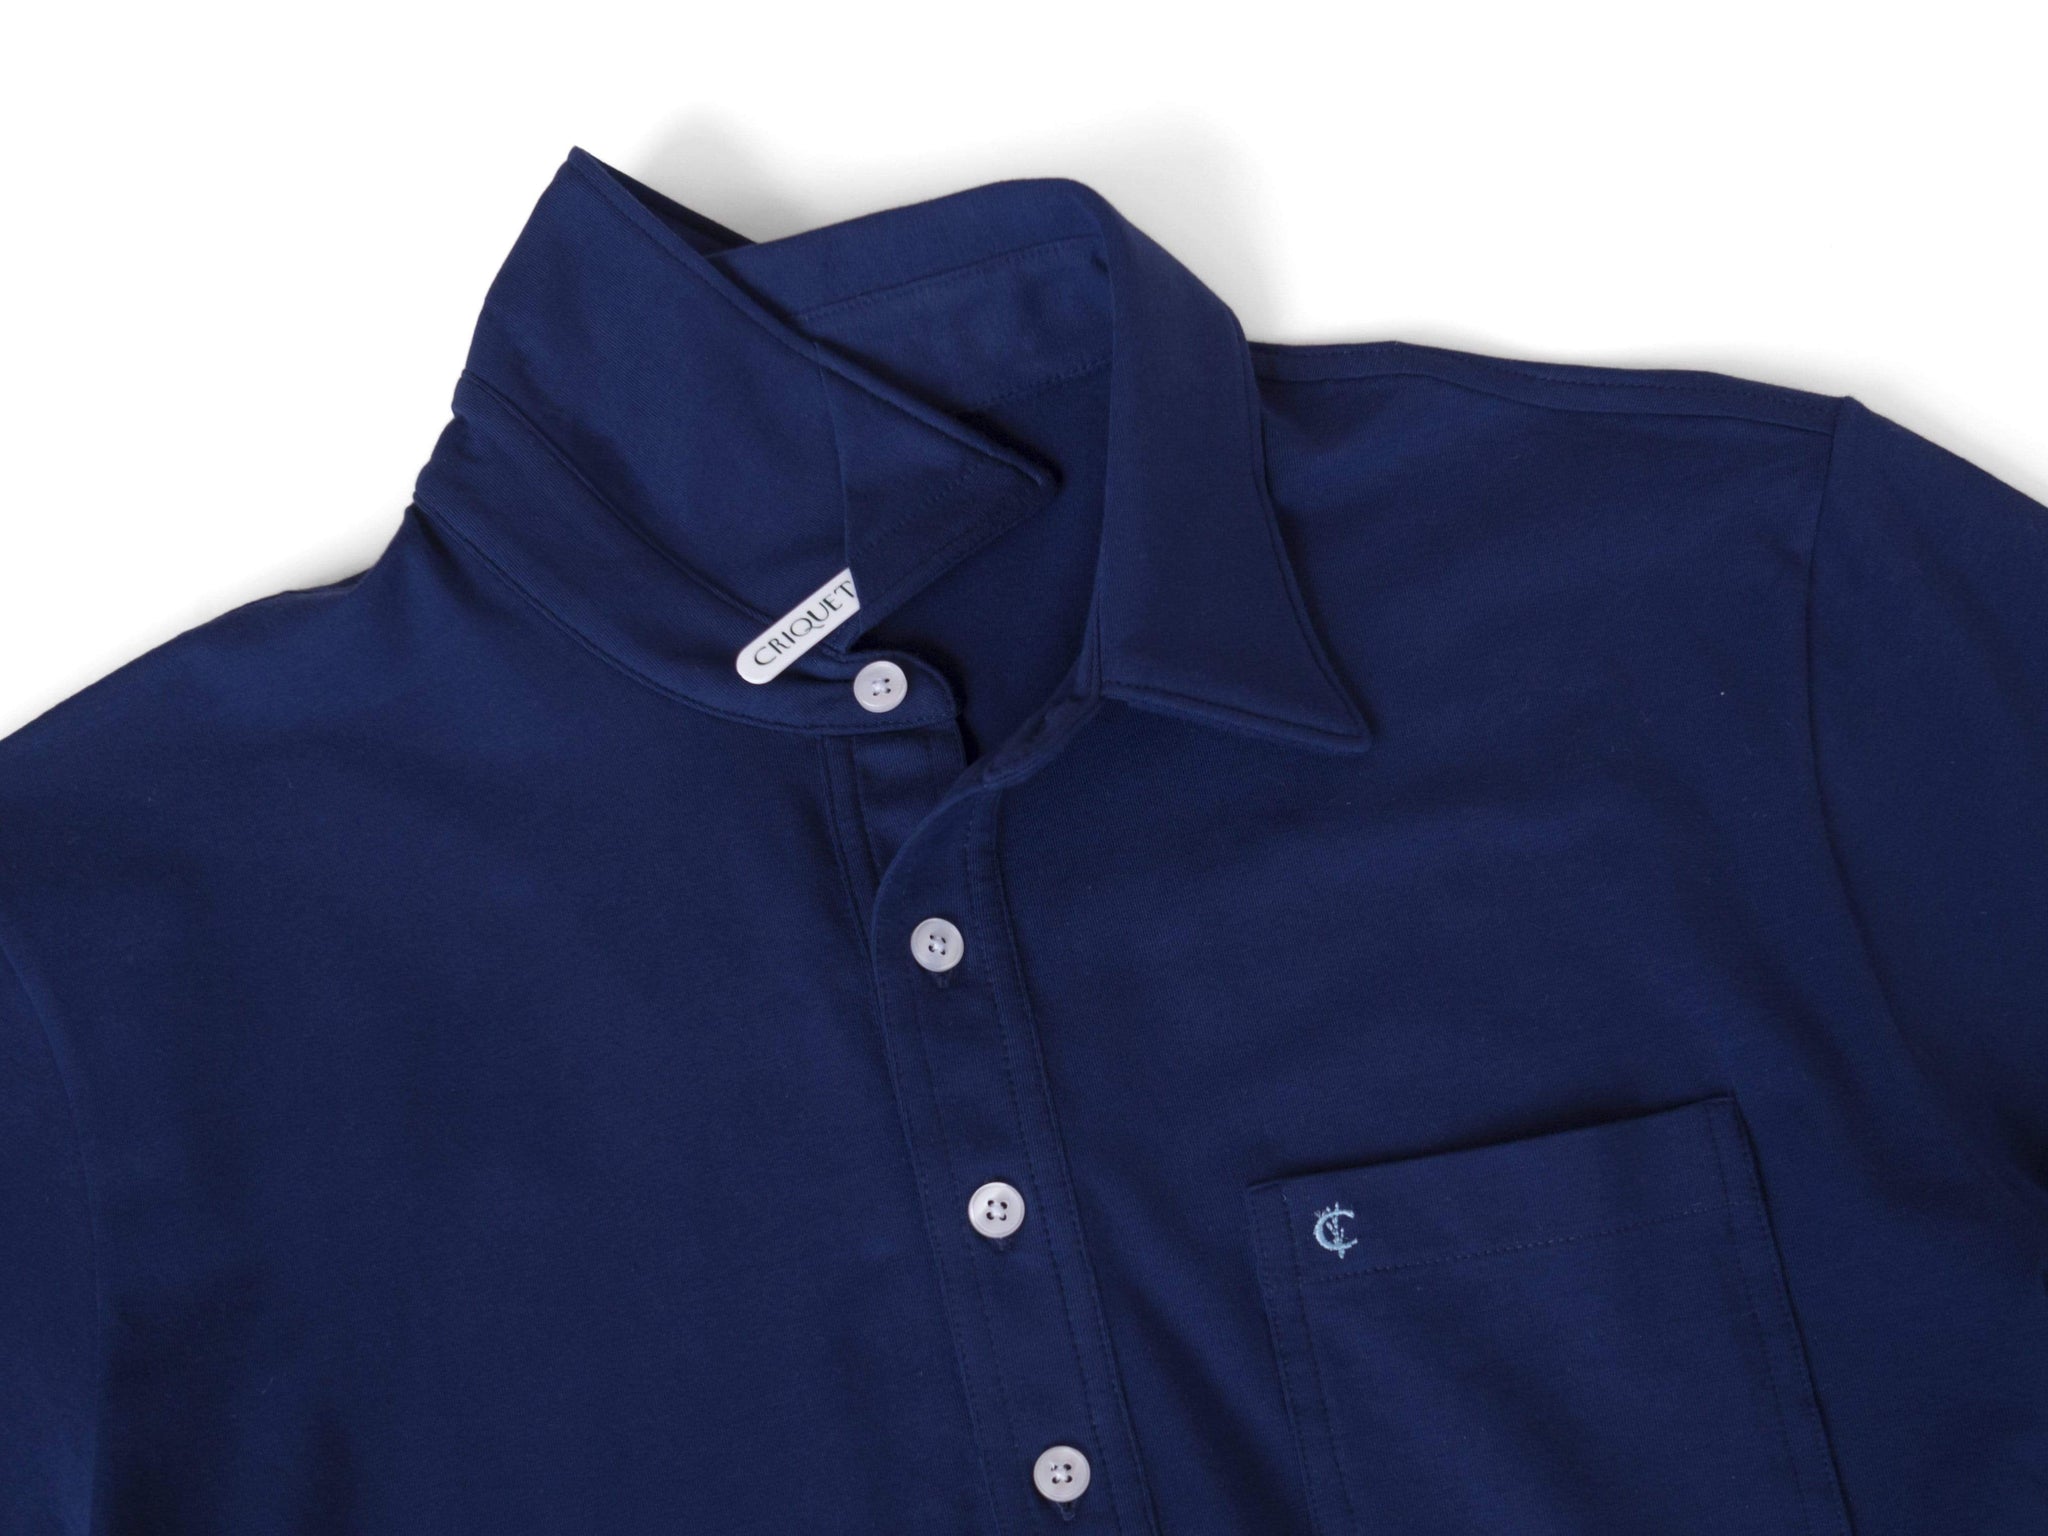 Top-Shelf Players Shirt - Navy Blue – Criquet Shirts